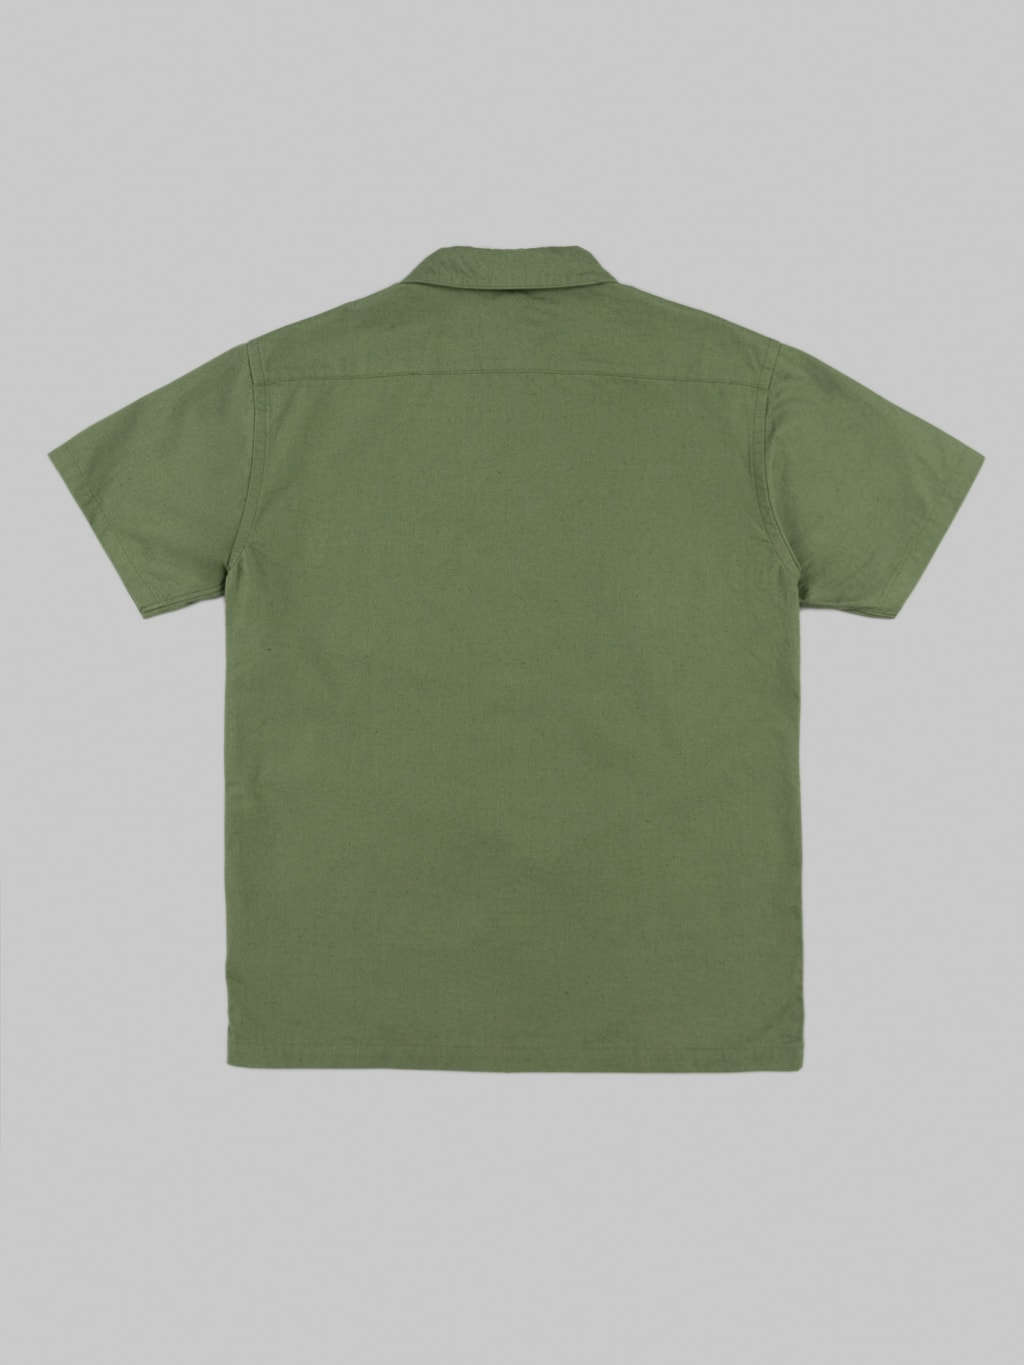 ues denim mechanic shirt sleeves shirt sage green back